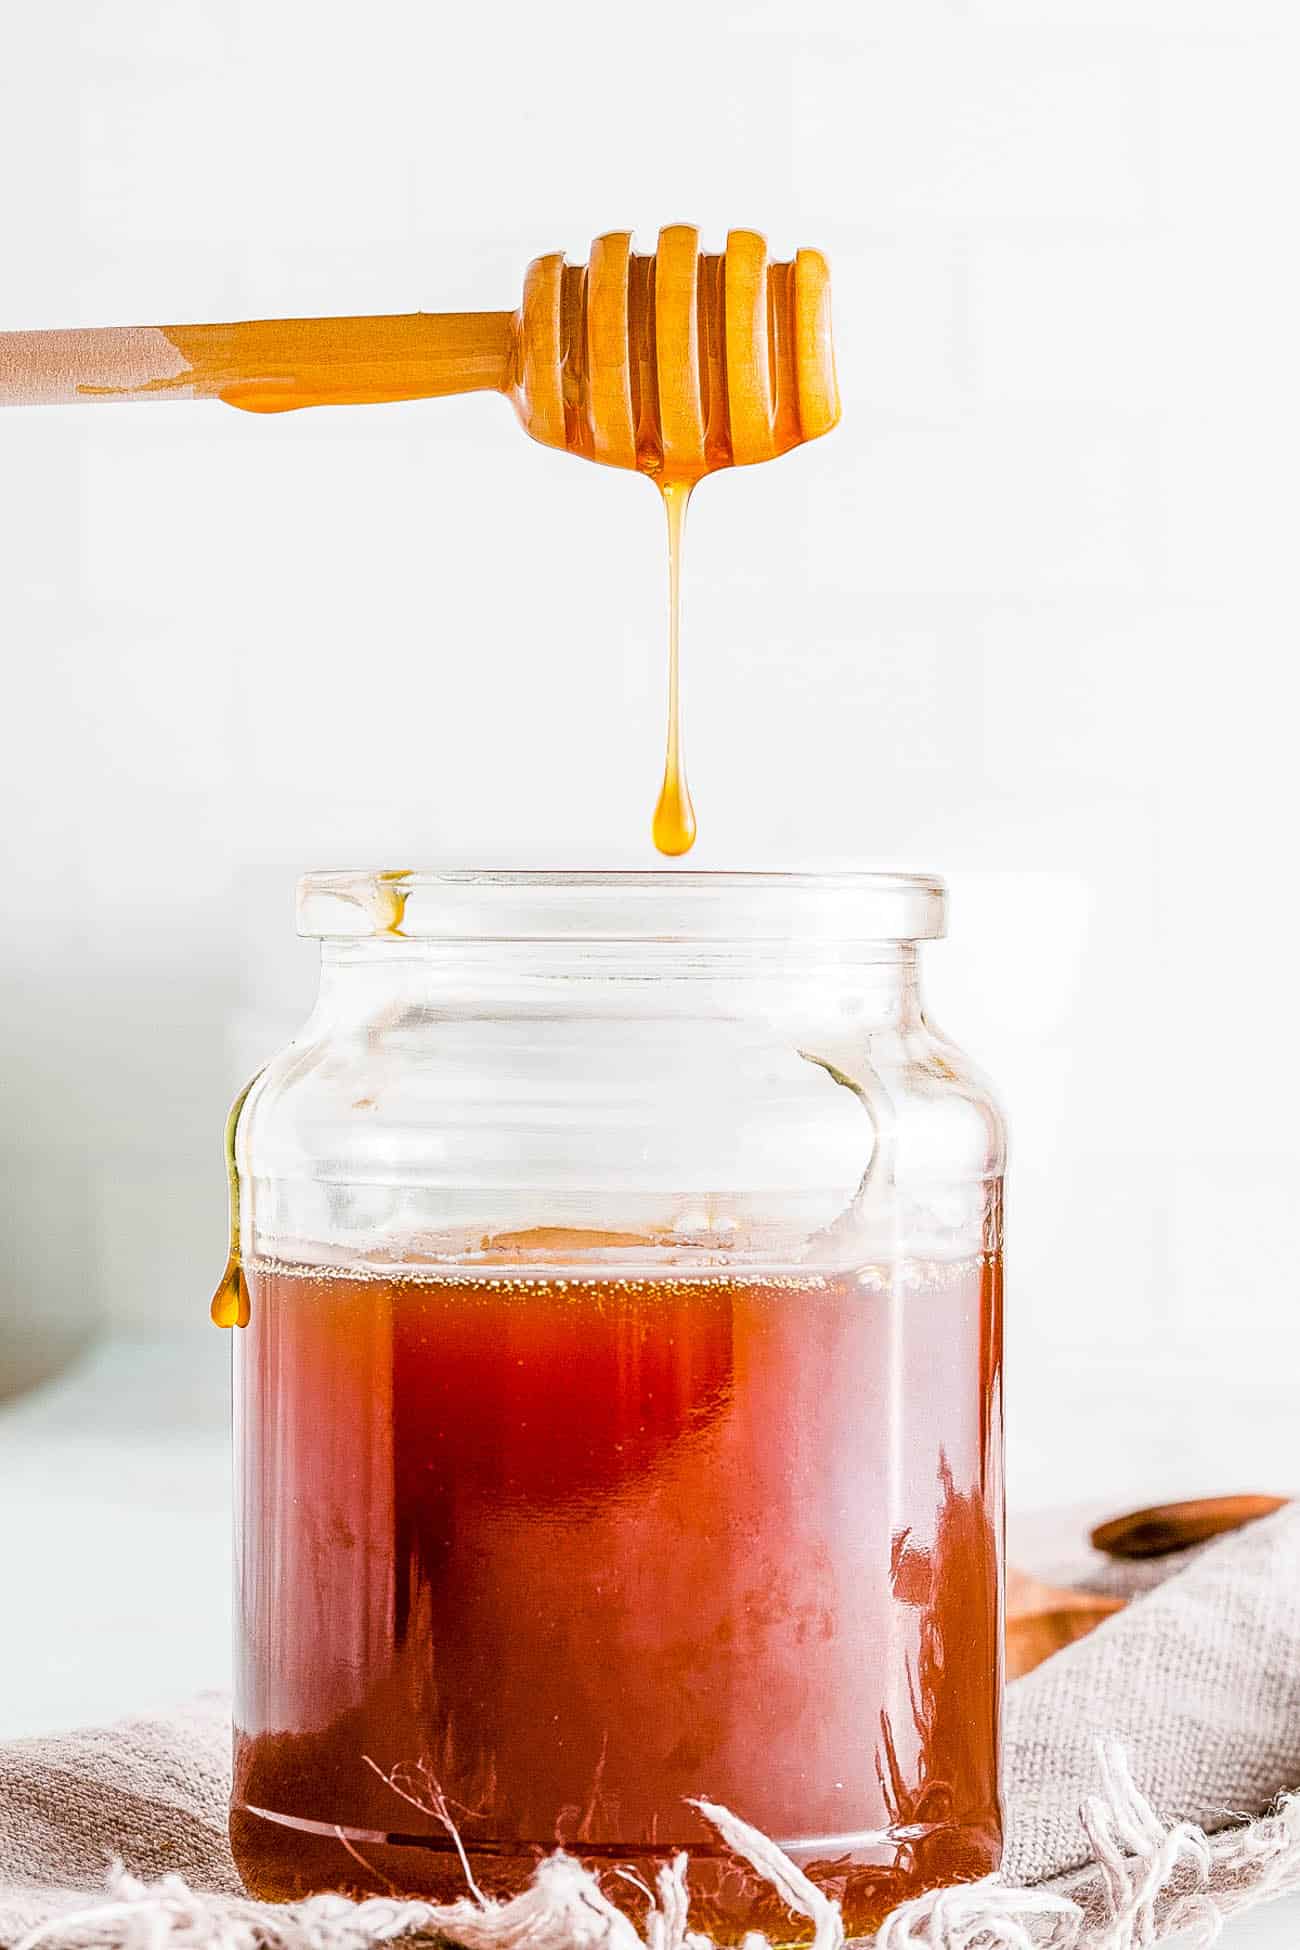 vegan honey in a glass jar